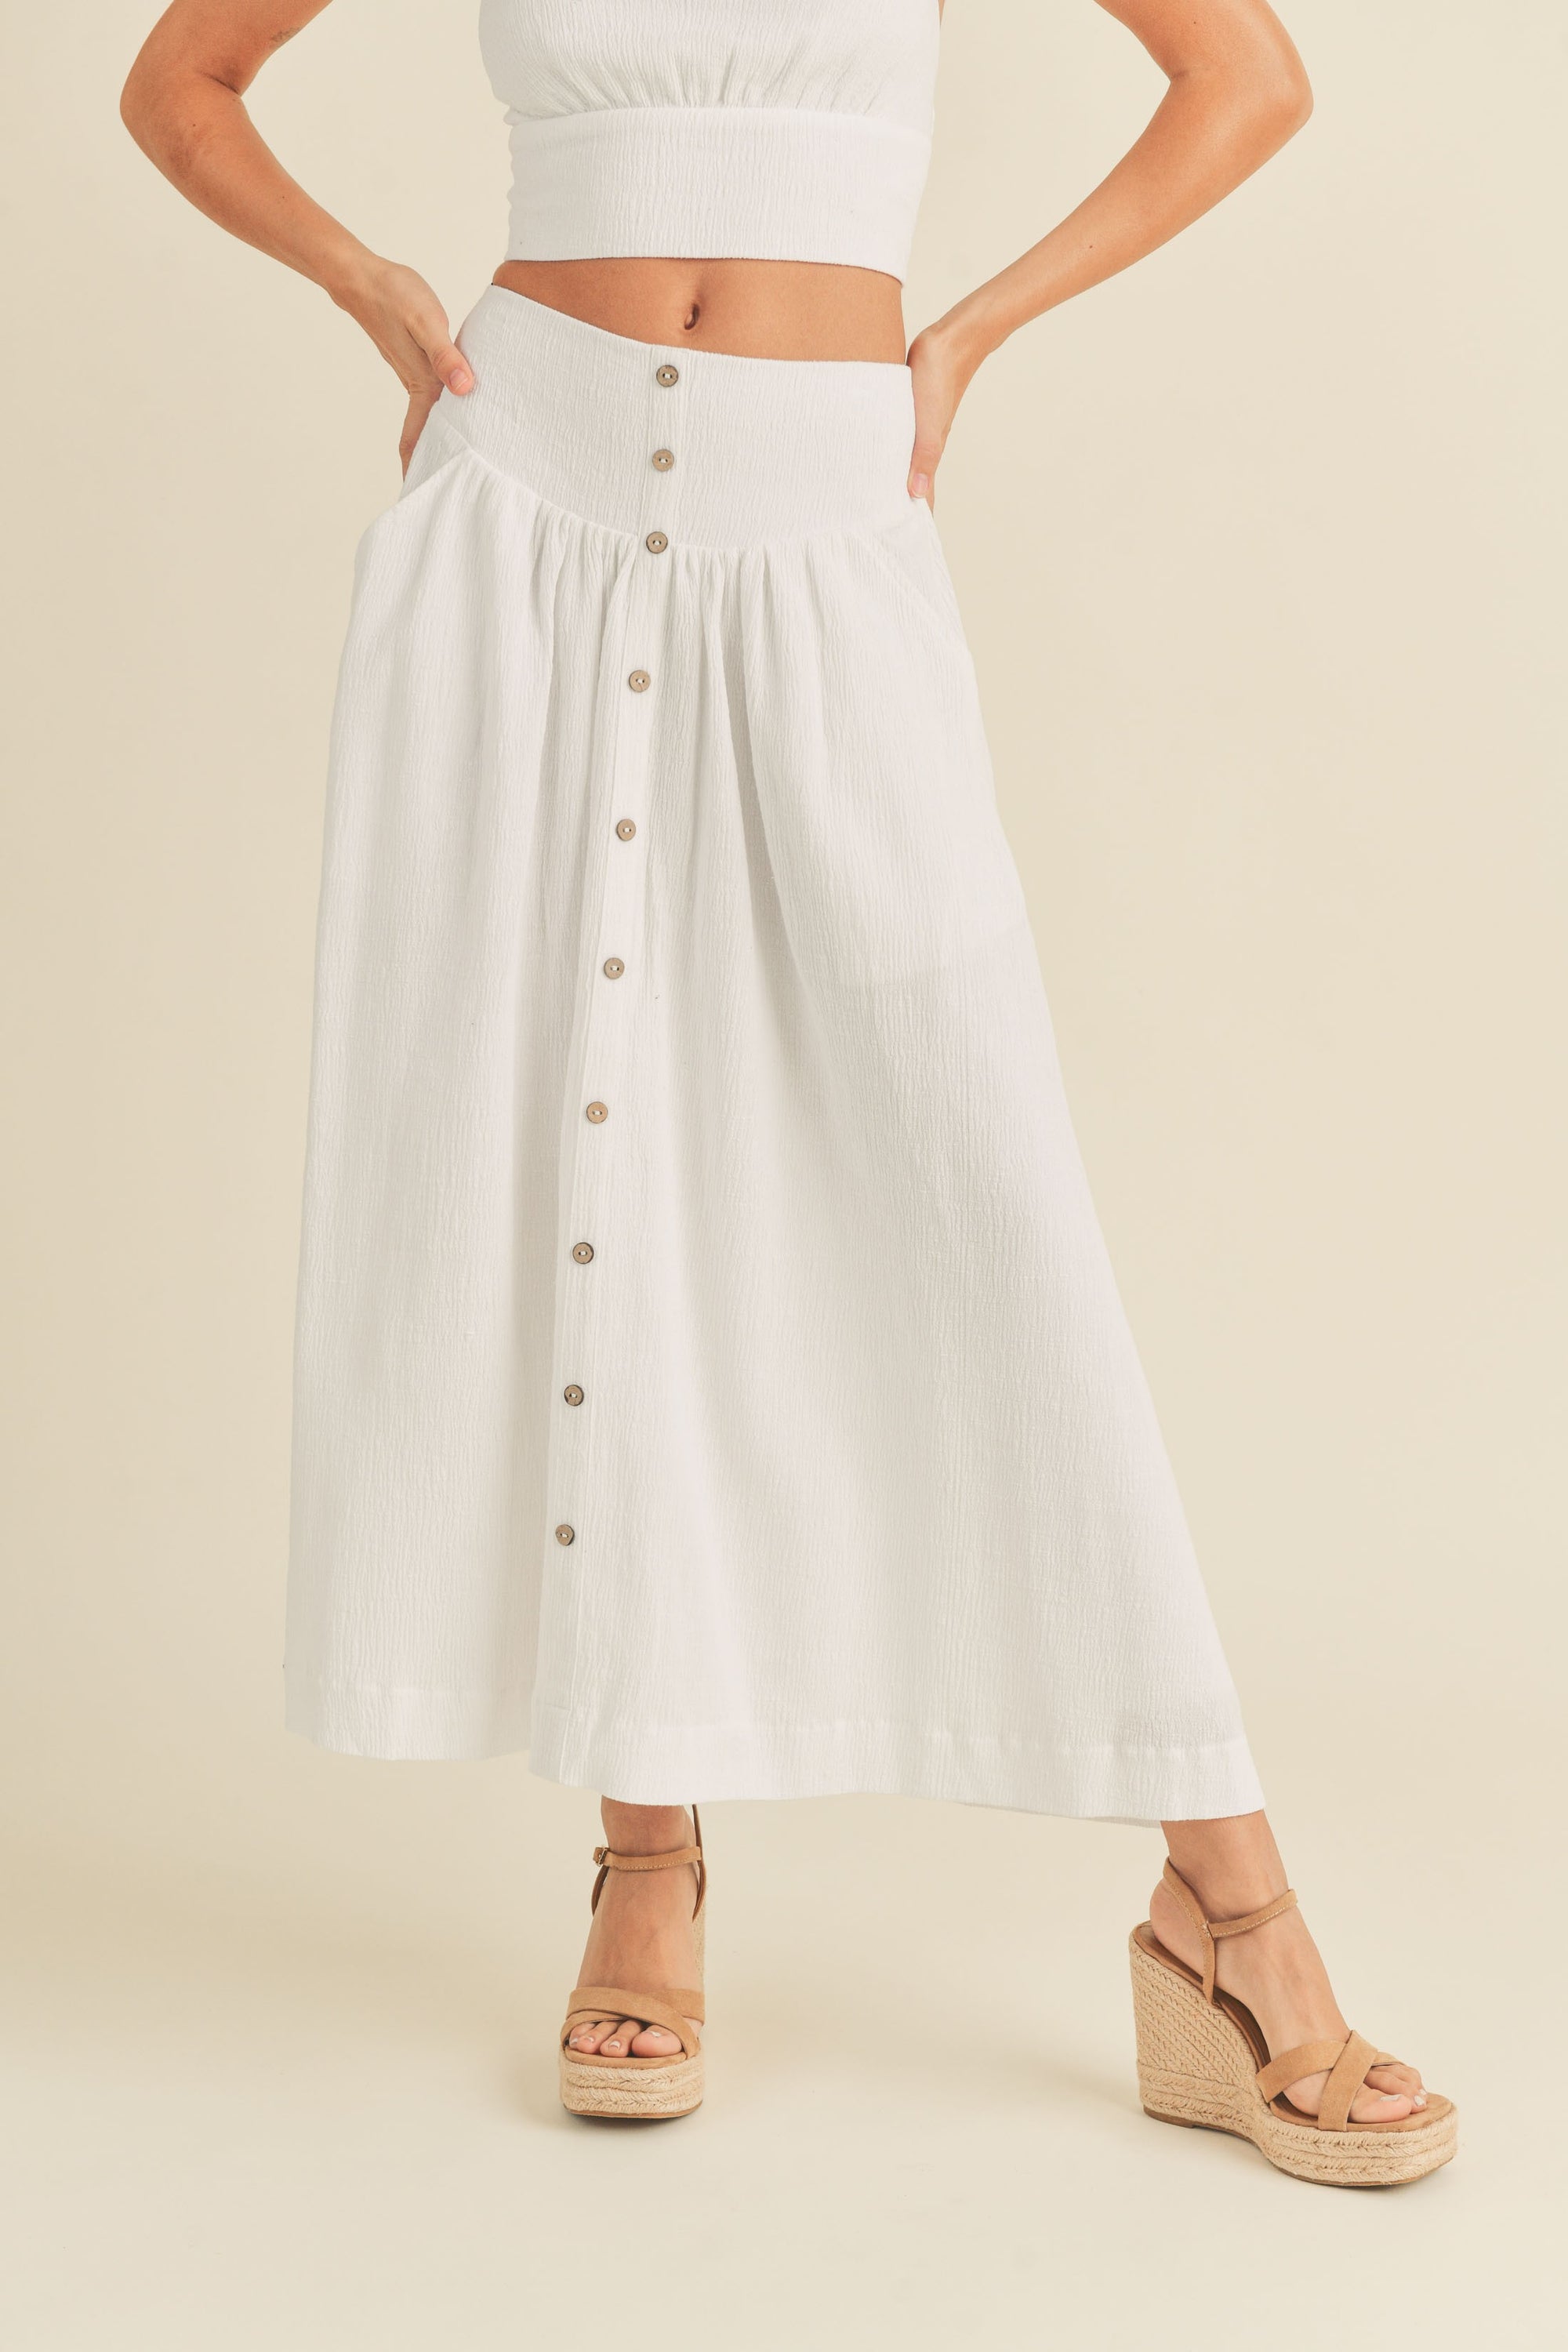 The Stori Halter Top + Skirt Set - Sold Separately